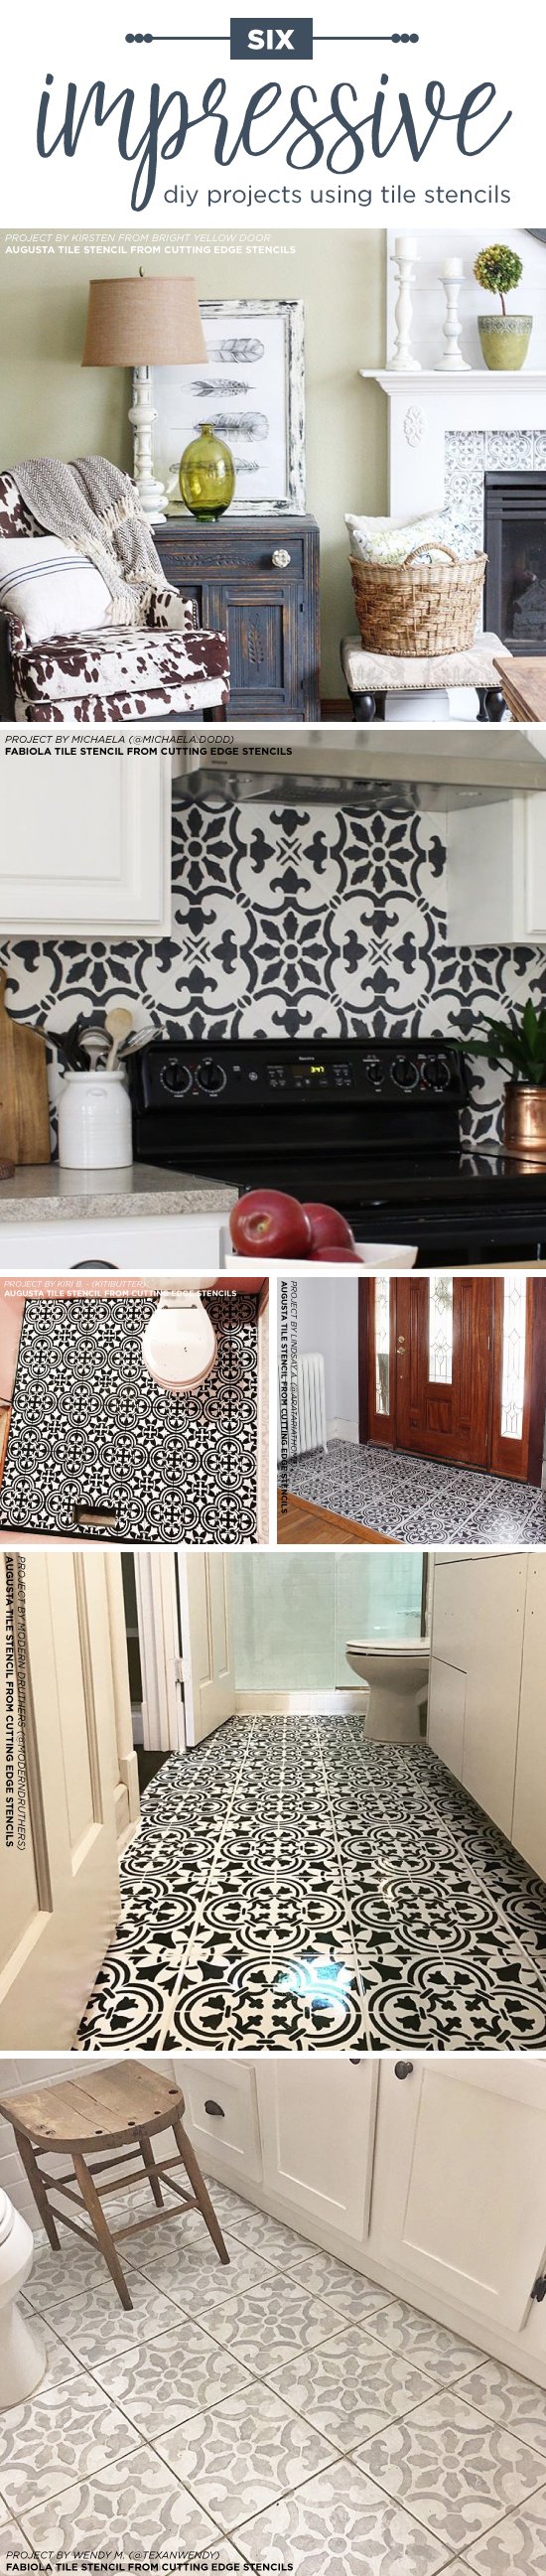 Cutting Edge Stencils shares DIY home decorating ideas like floors and backsplashes using tile stencil patterns. http://www.cuttingedgestencils.com/wall-stencils-stencil-designs.html